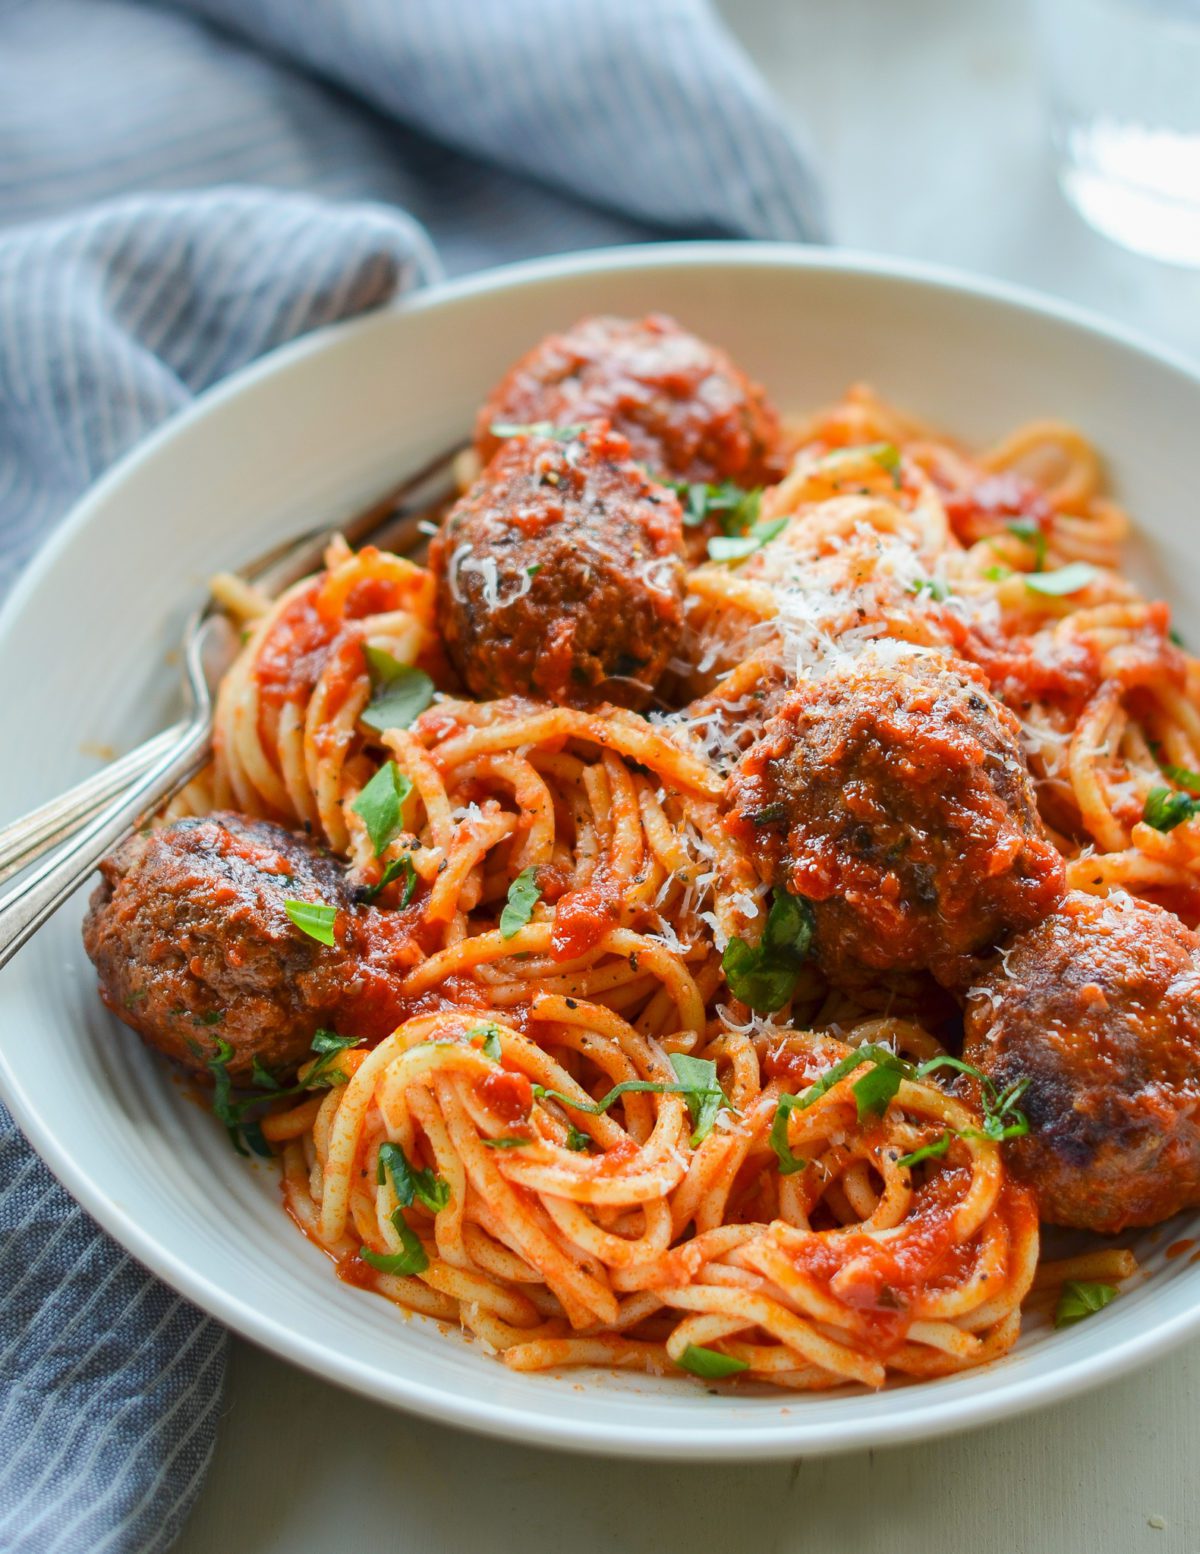 https://www.onceuponachef.com/images/2019/09/Spaghetti-and-Meatballs-1200x1554.jpg